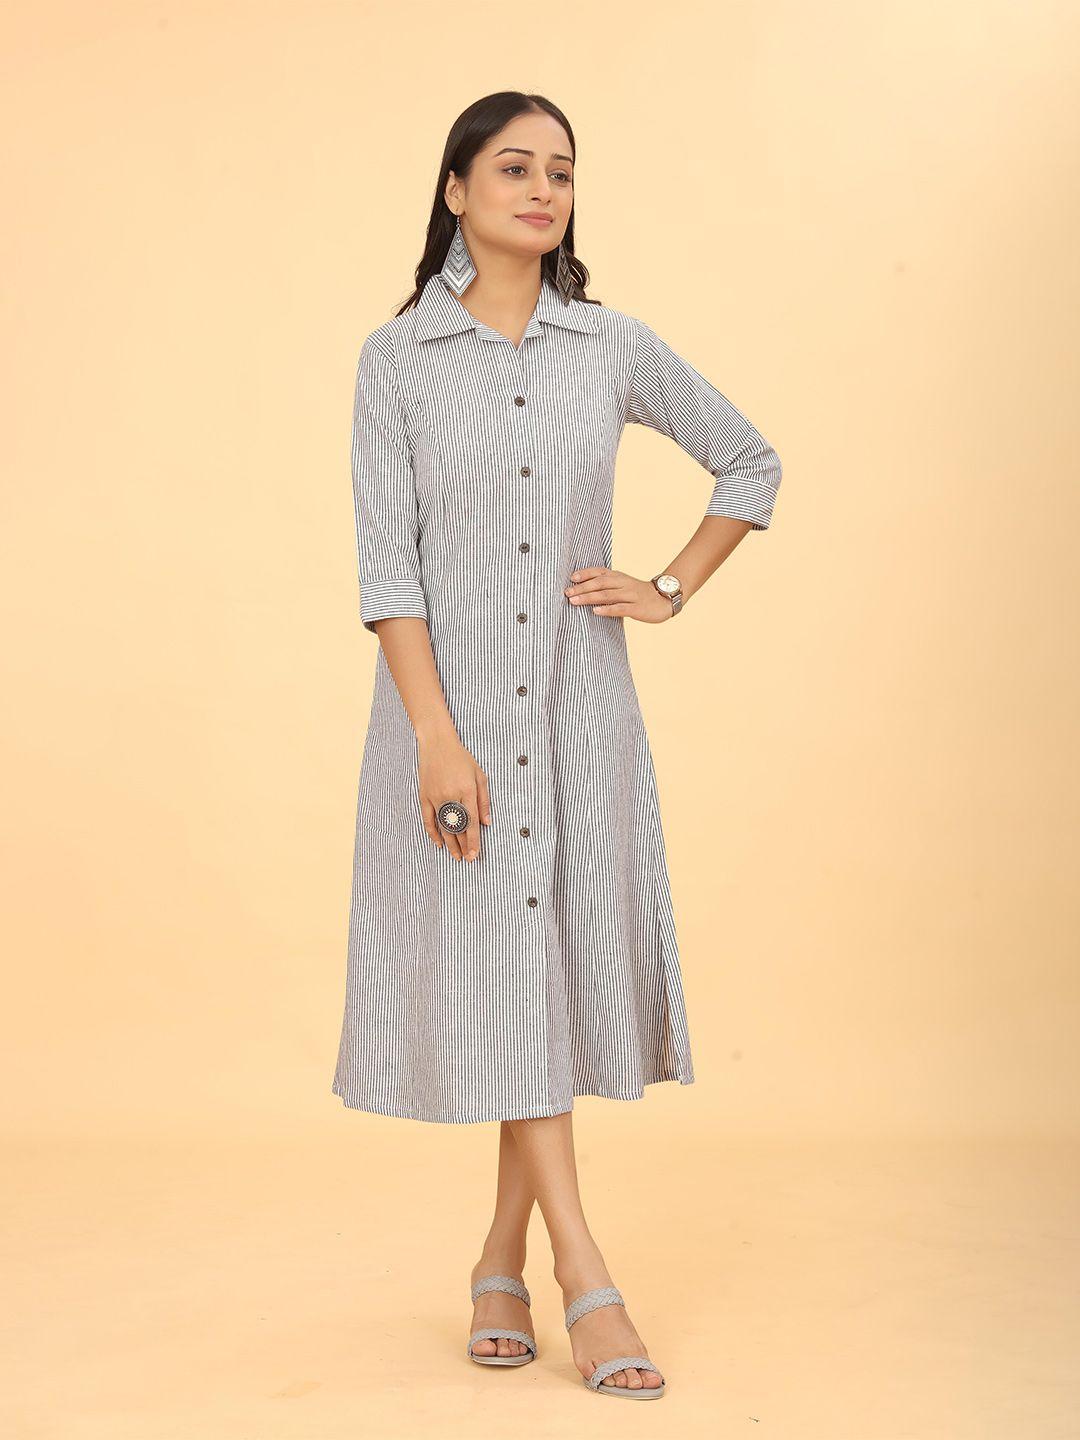 kesudi striped print shirt collar three-quarter sleeves cotton shirt midi dress